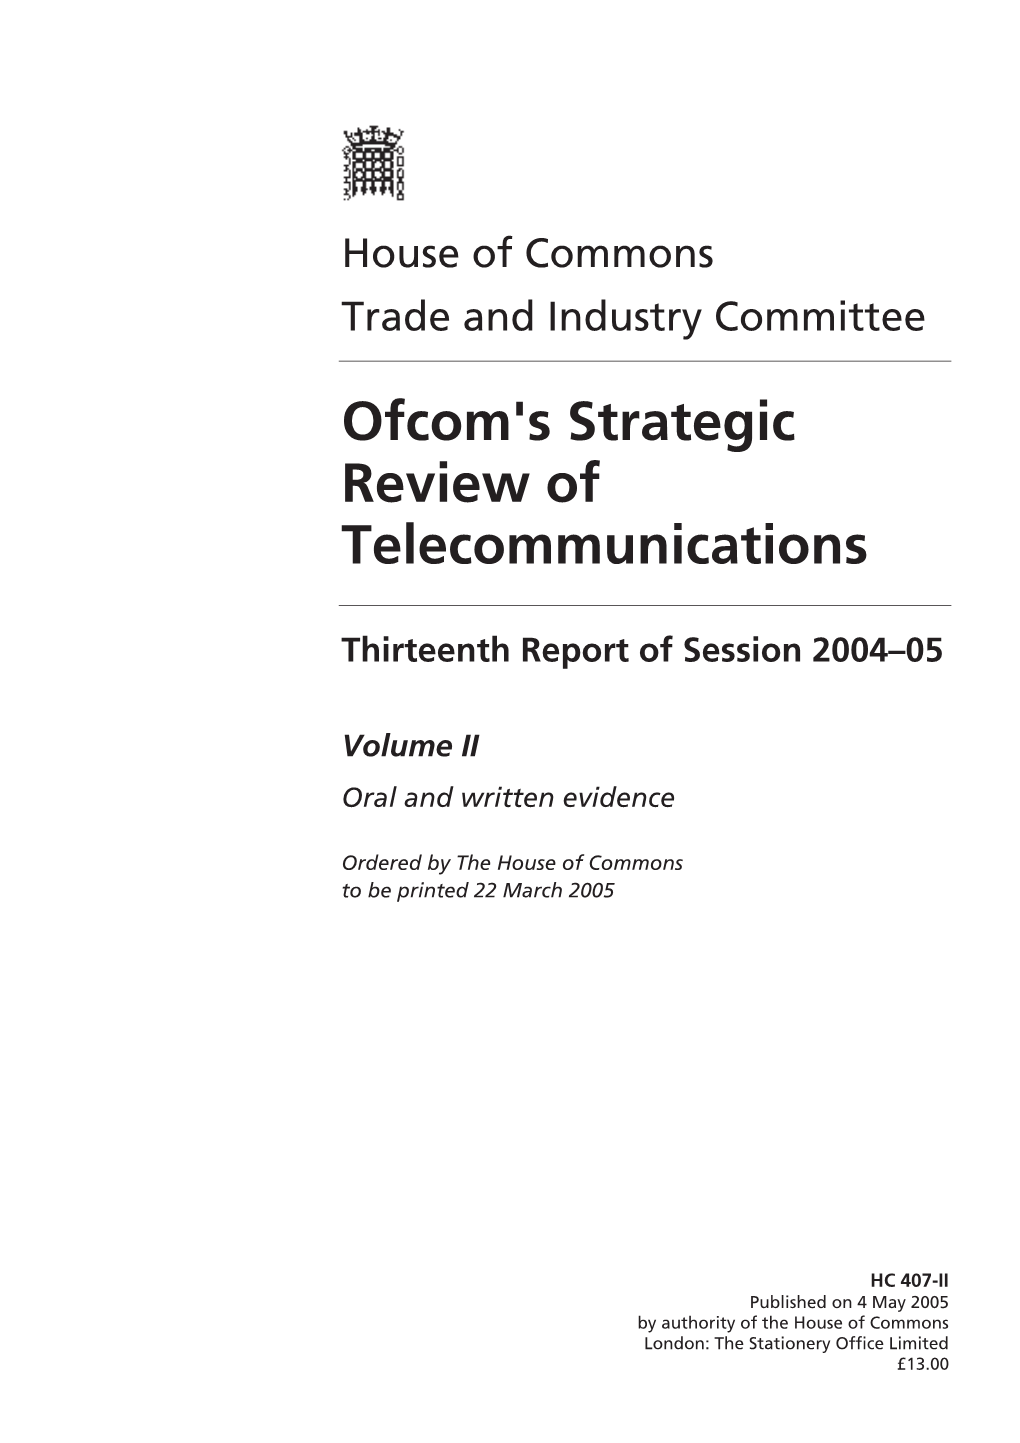 Ofcom's Strategic Review of Telecommunications